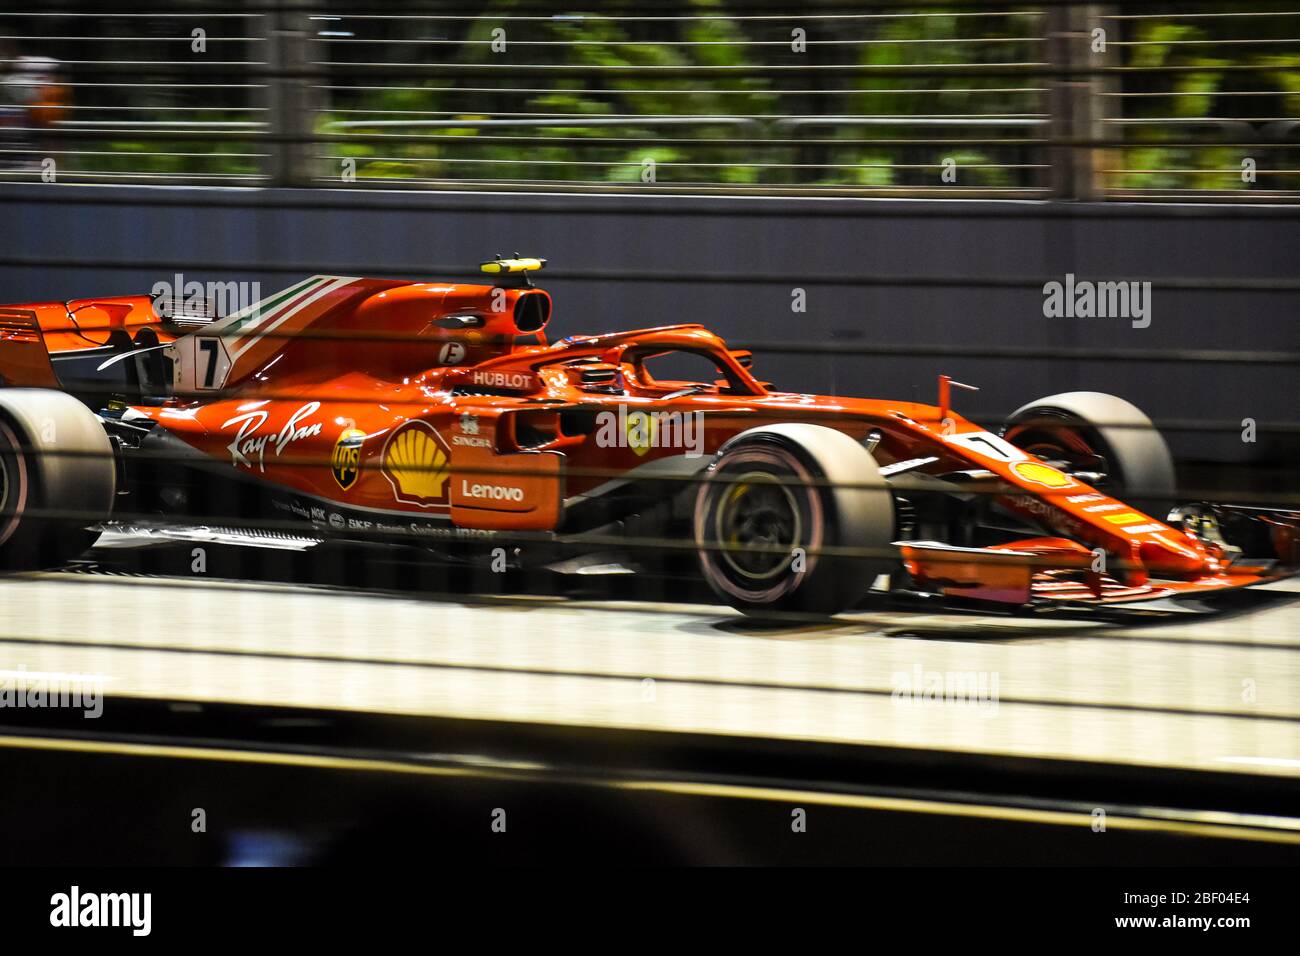 Kimi Raikkonen in the Singapore F1 Grand Prix 2018 Stock Photo